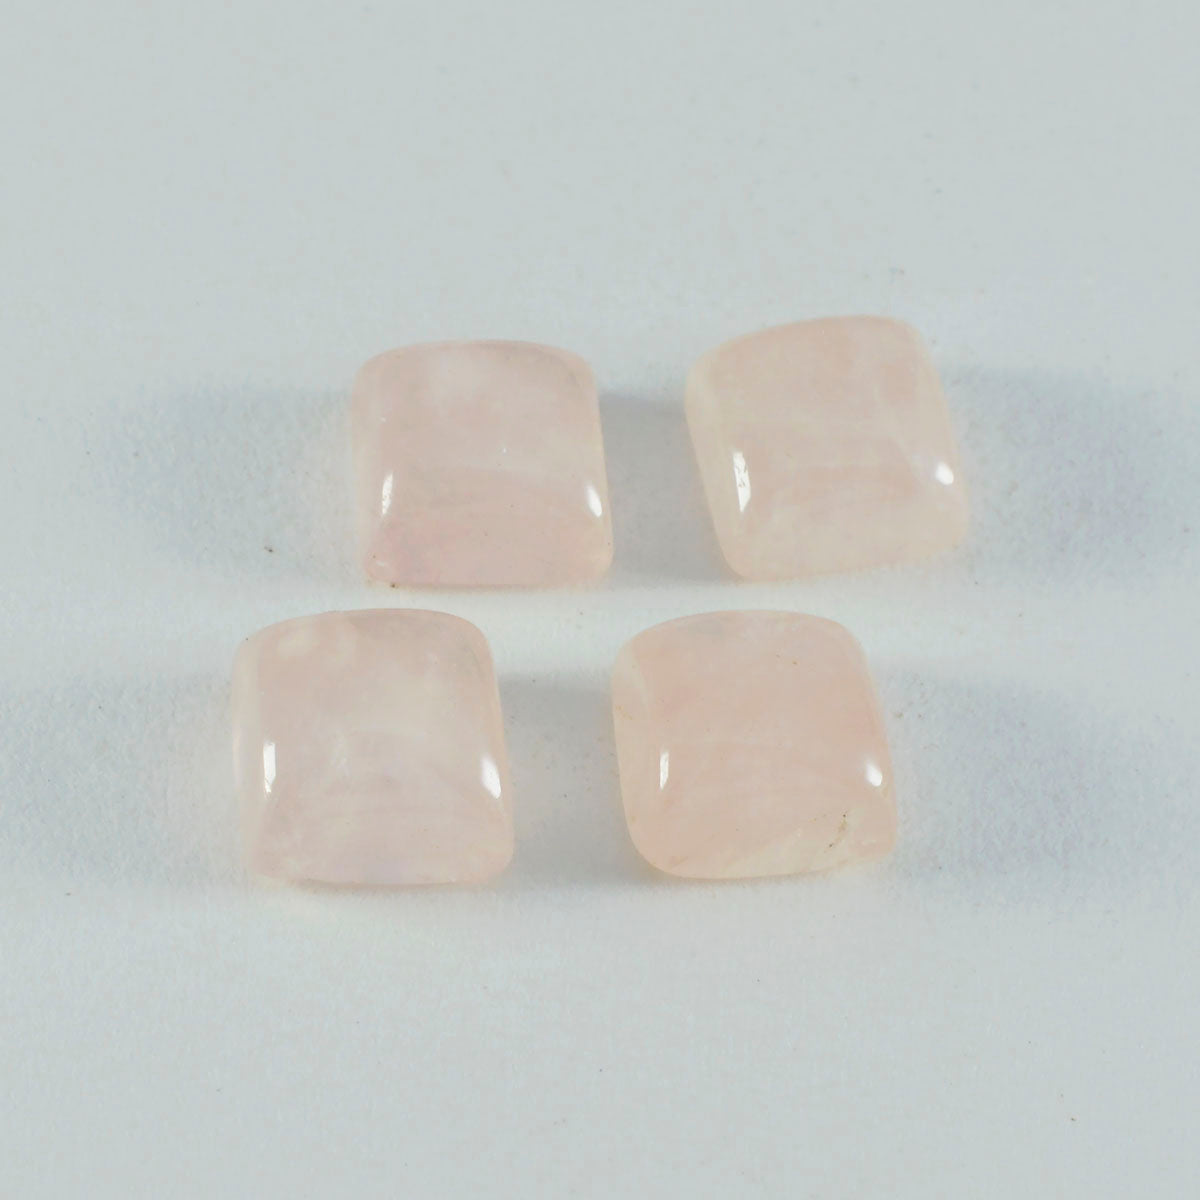 Riyogems 1PC Pink Rose Quartz Cabochon 14x14 mm Square Shape awesome Quality Gems